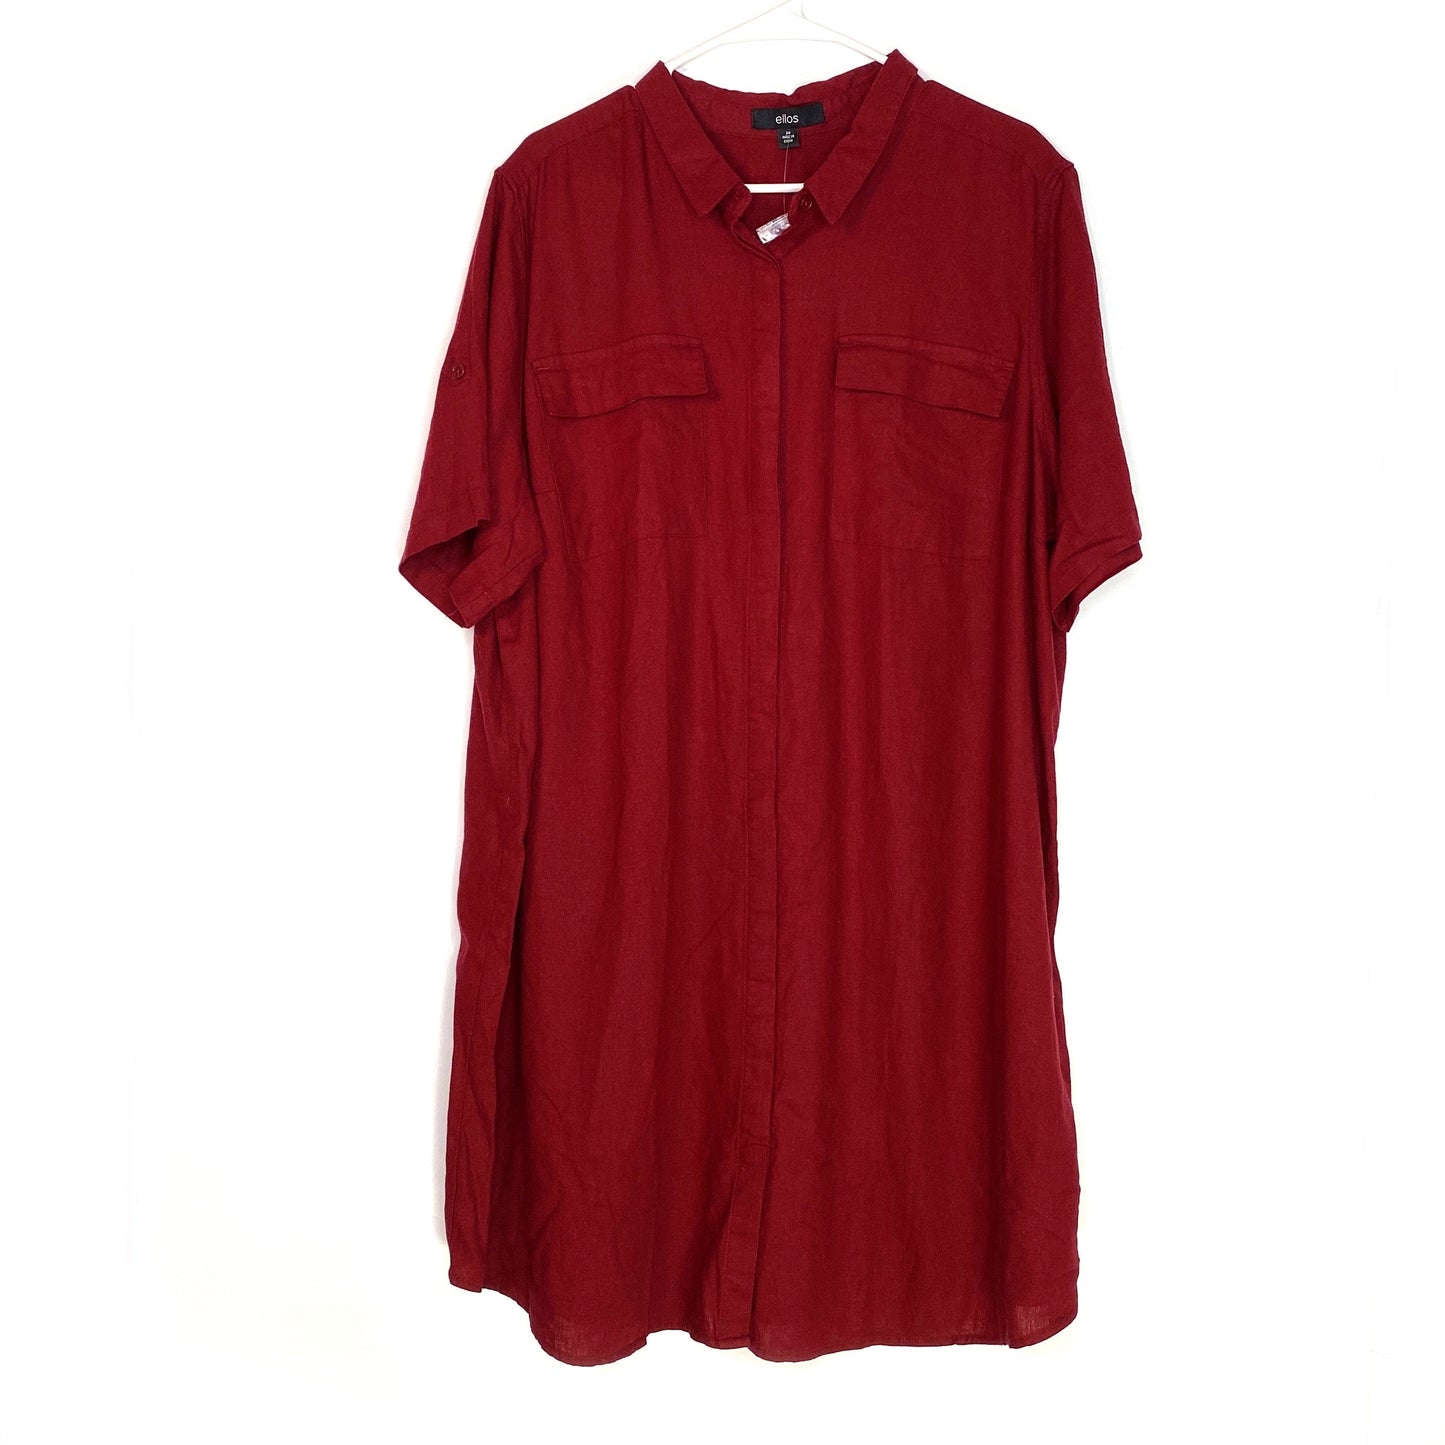 Ellis Womens Size 24 Maroon Red Shirt Dress S/s NWT